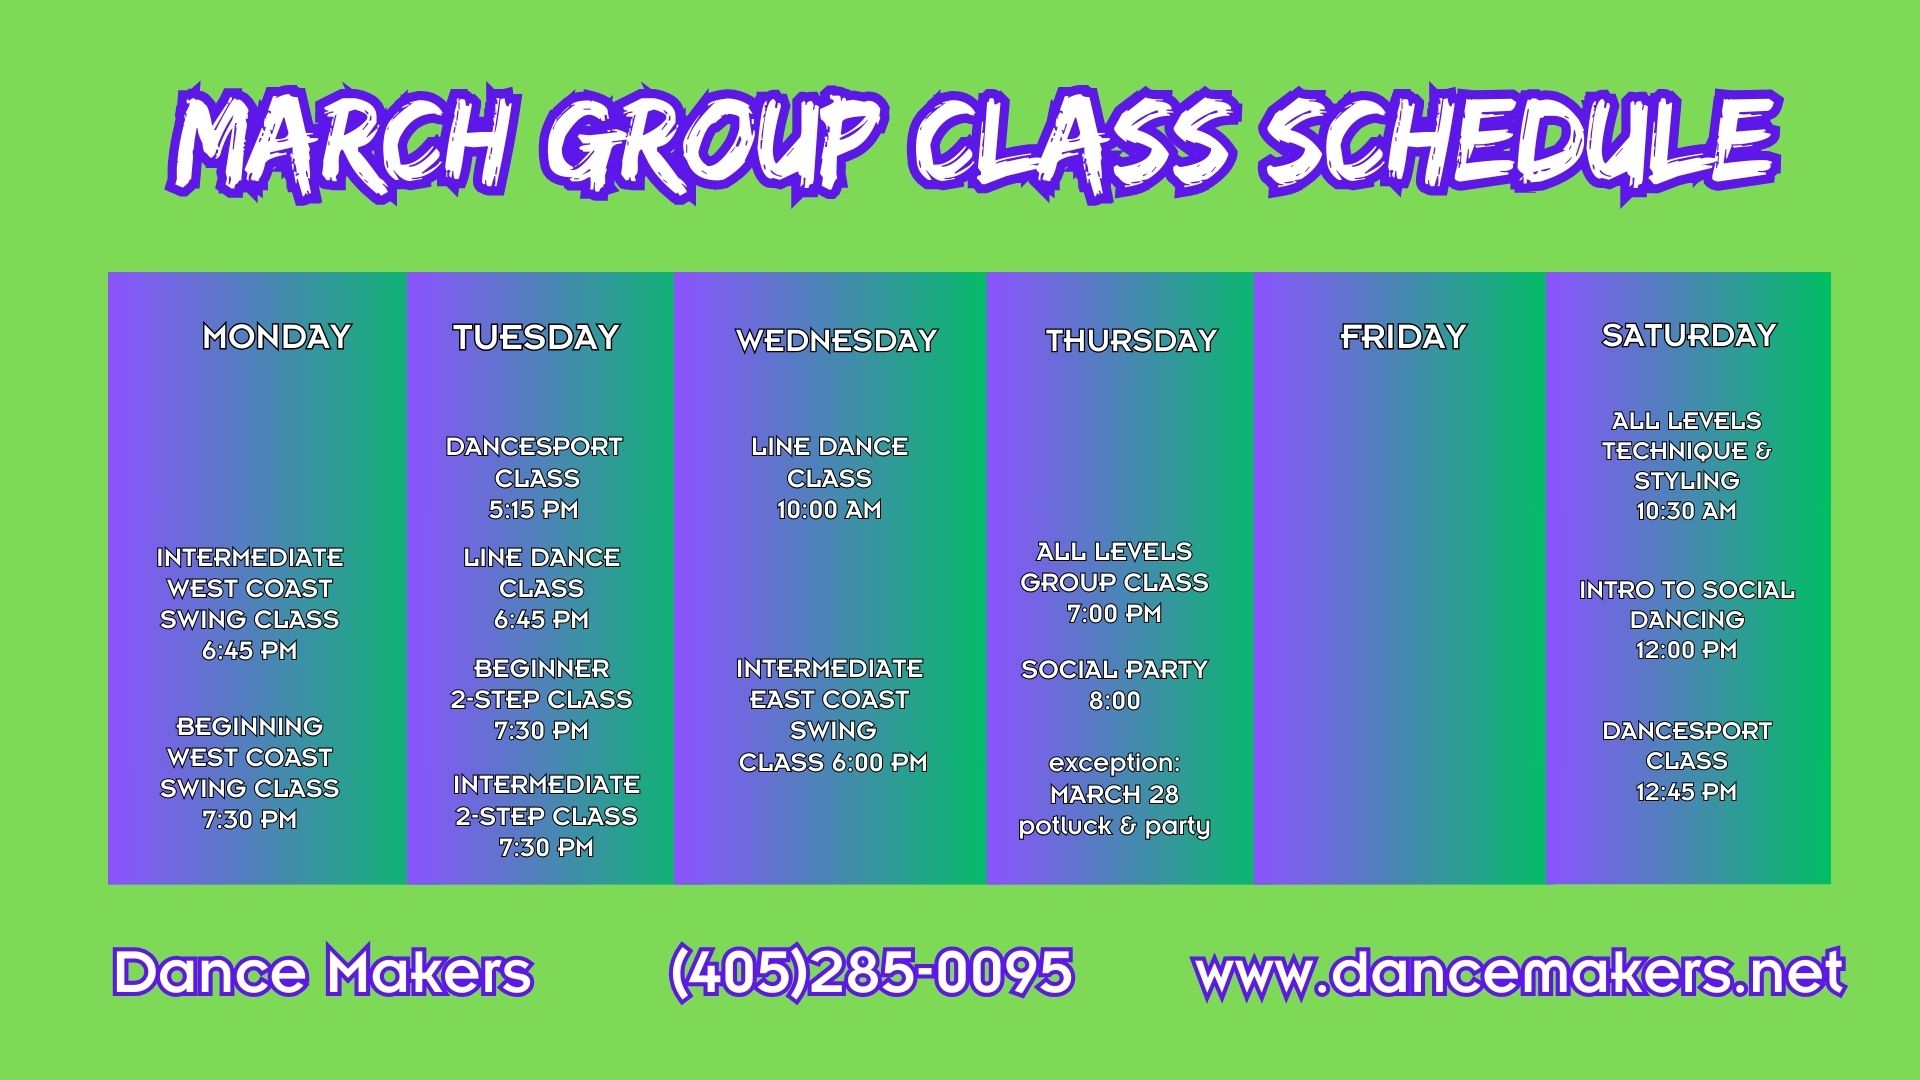 Group Class Schedule (16 × 9 in) (Presentation)